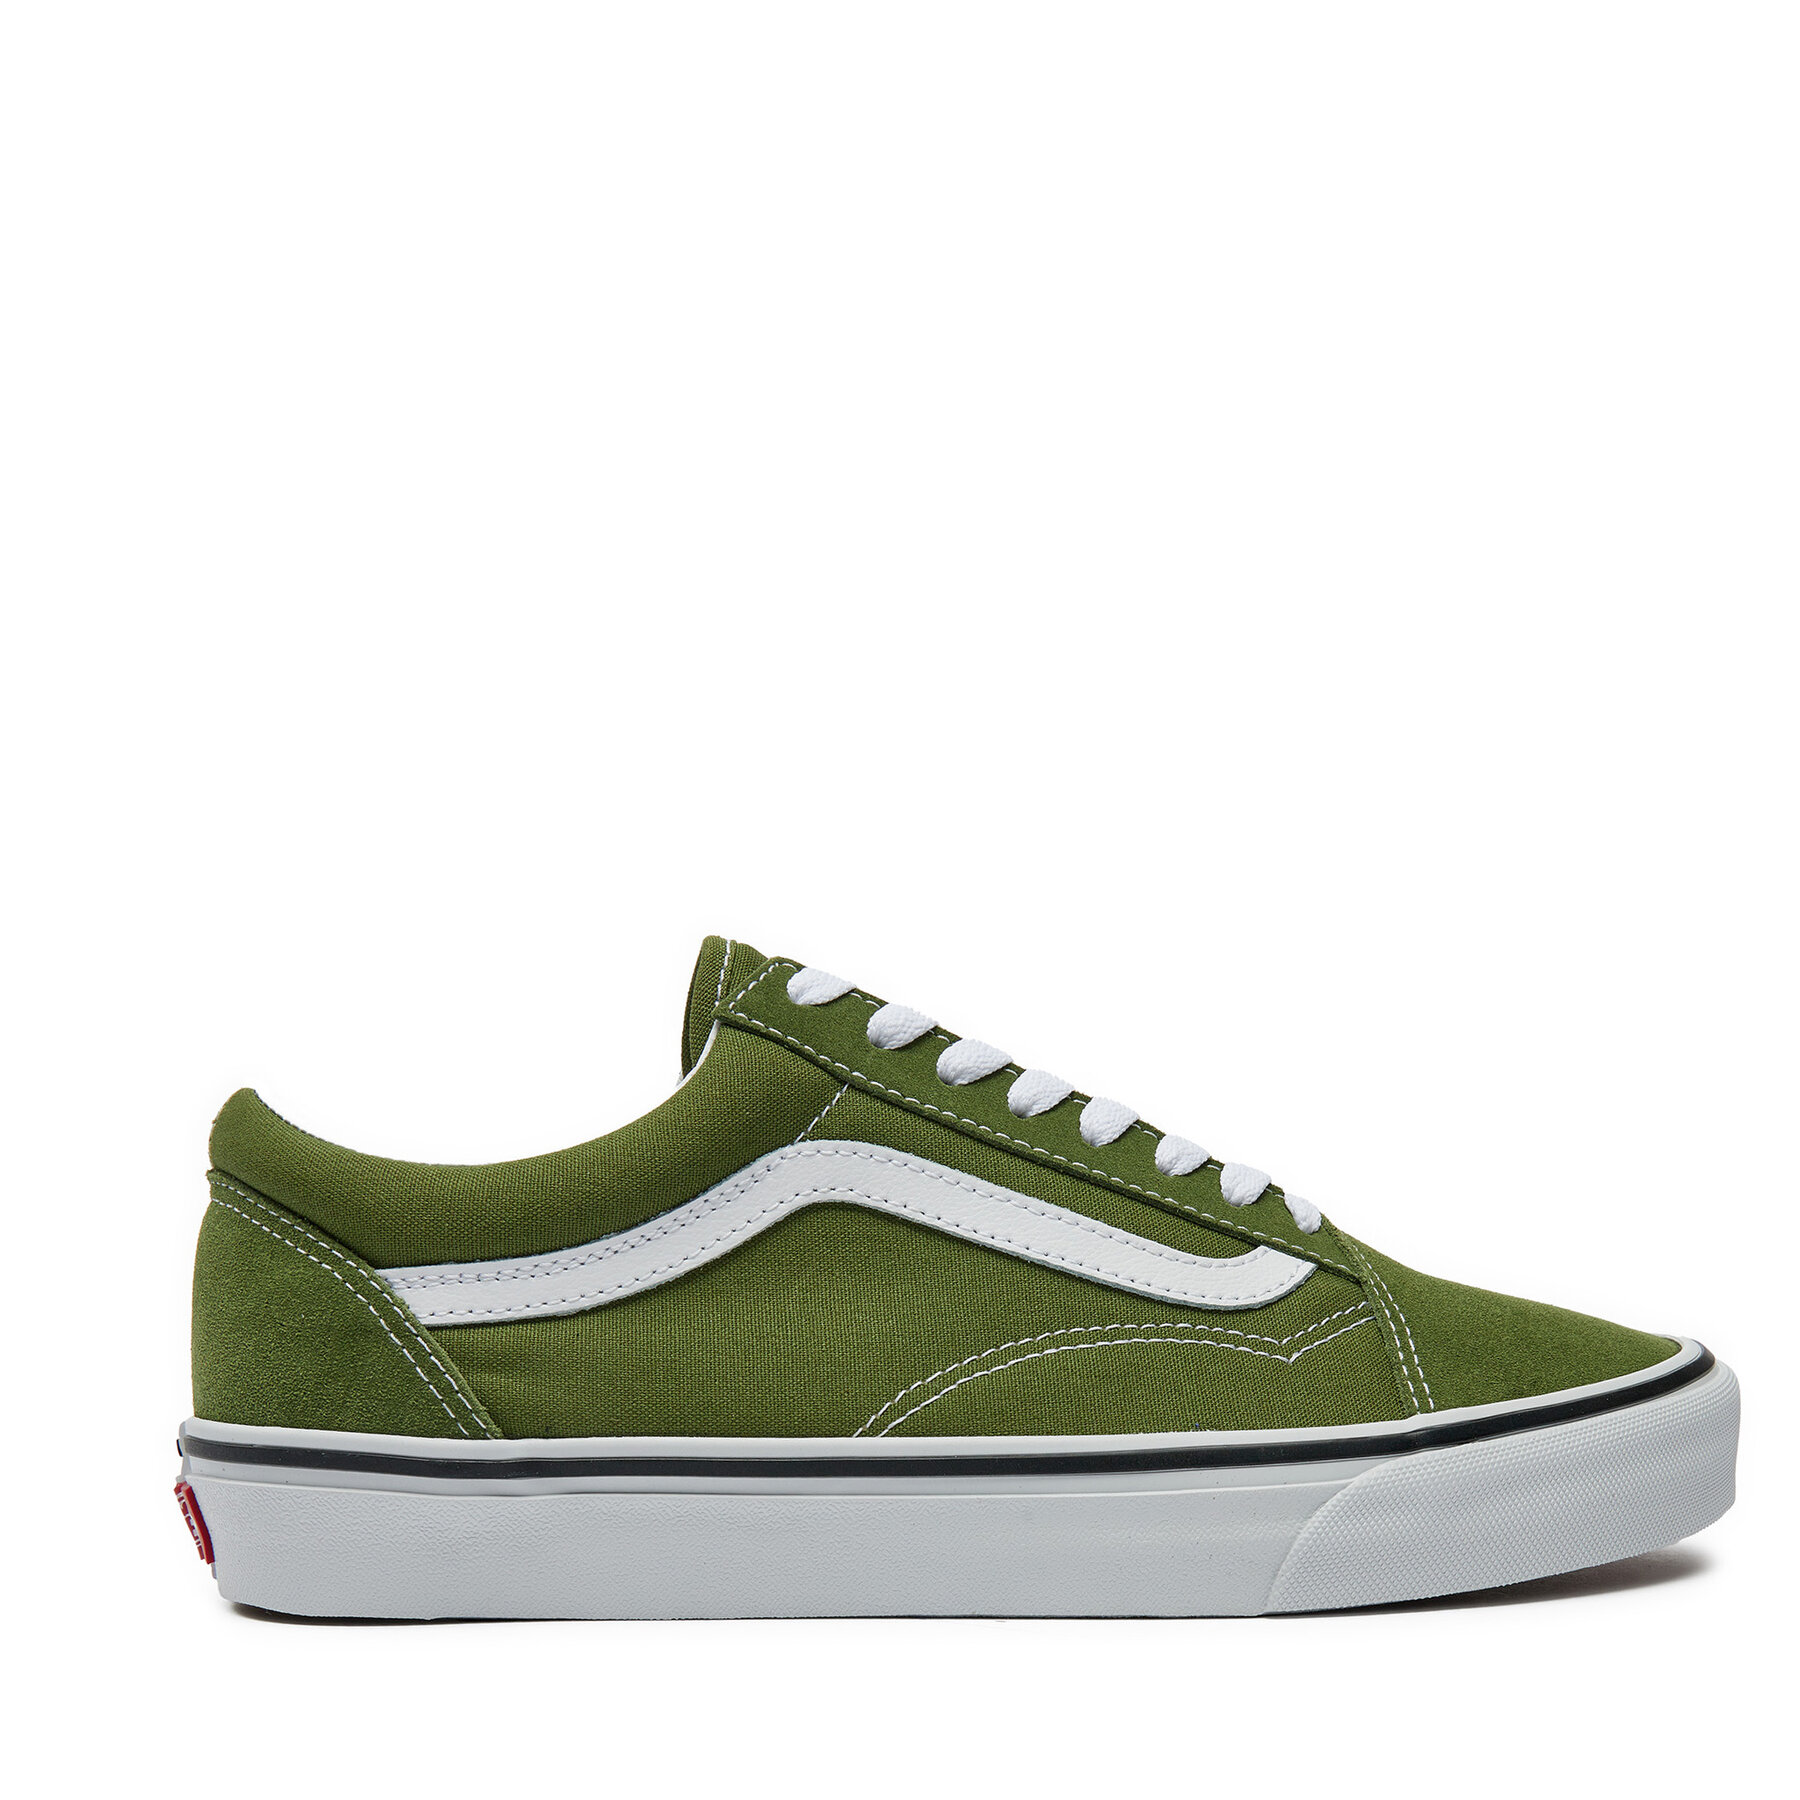 Sneakers aus Stoff Vans Old Skool VN000CT8CIB1 Grün von Vans